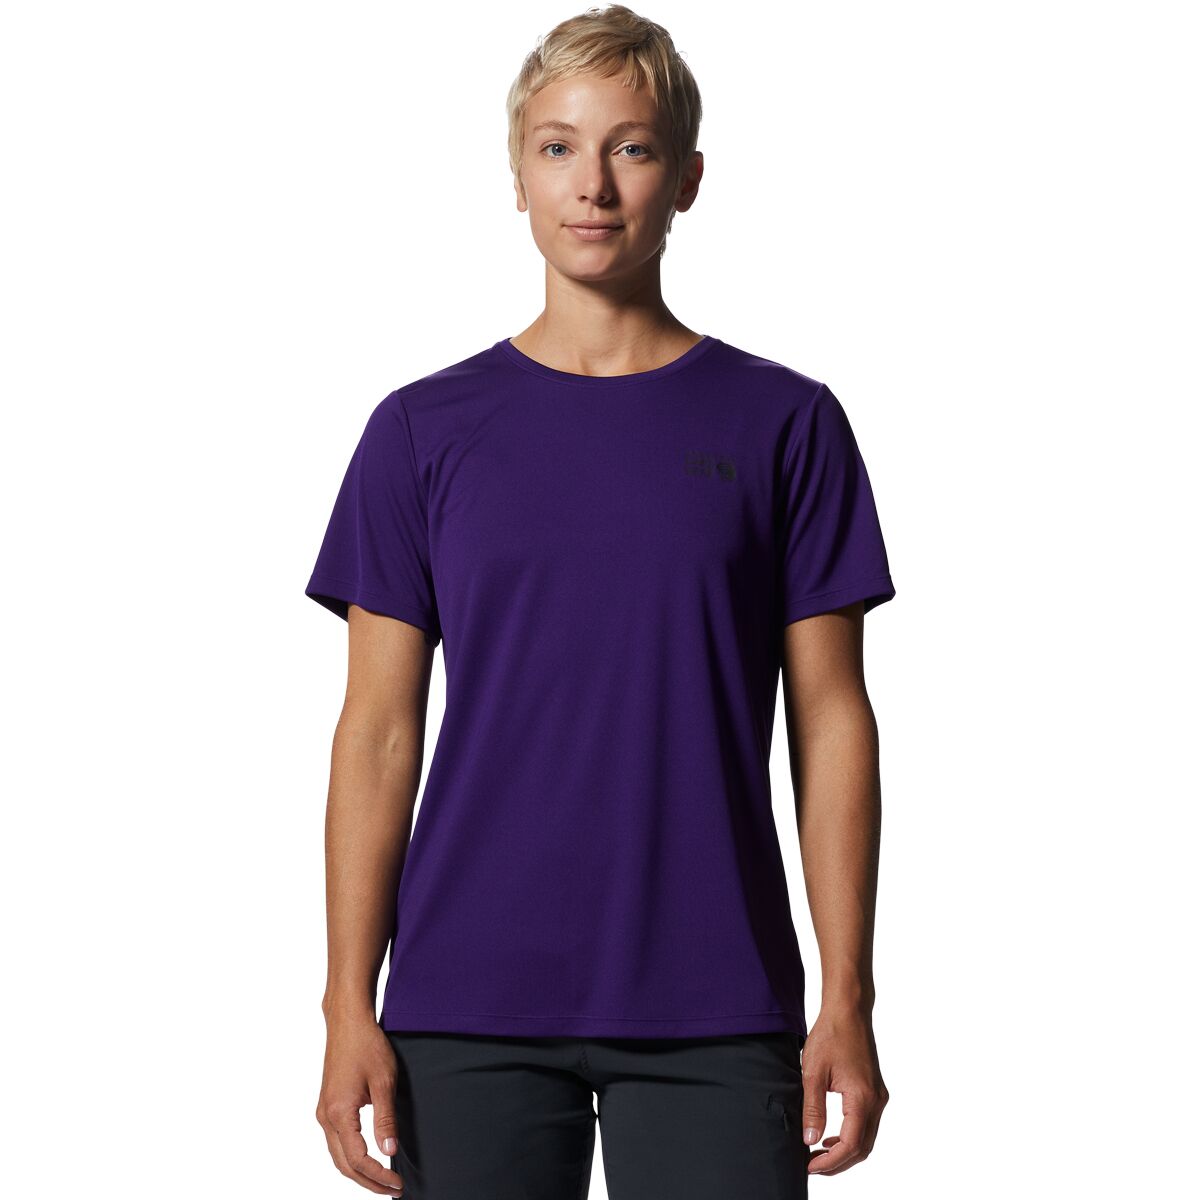 Wicked Tech Short-Sleeve Shirt - Women